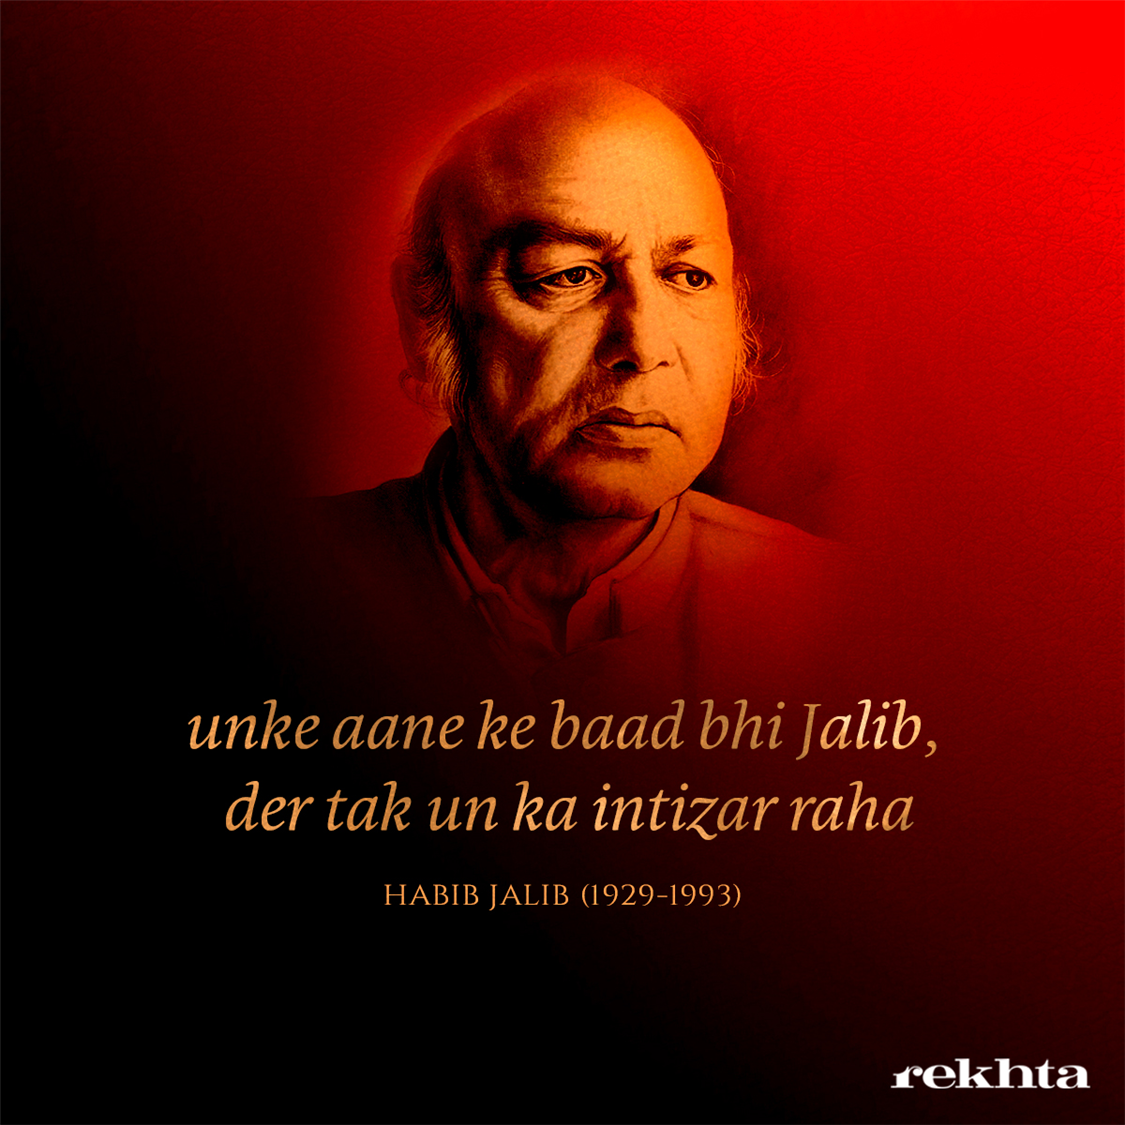 un ke aane ke ba.ad bhii 'jaalib'-Habib Jalib